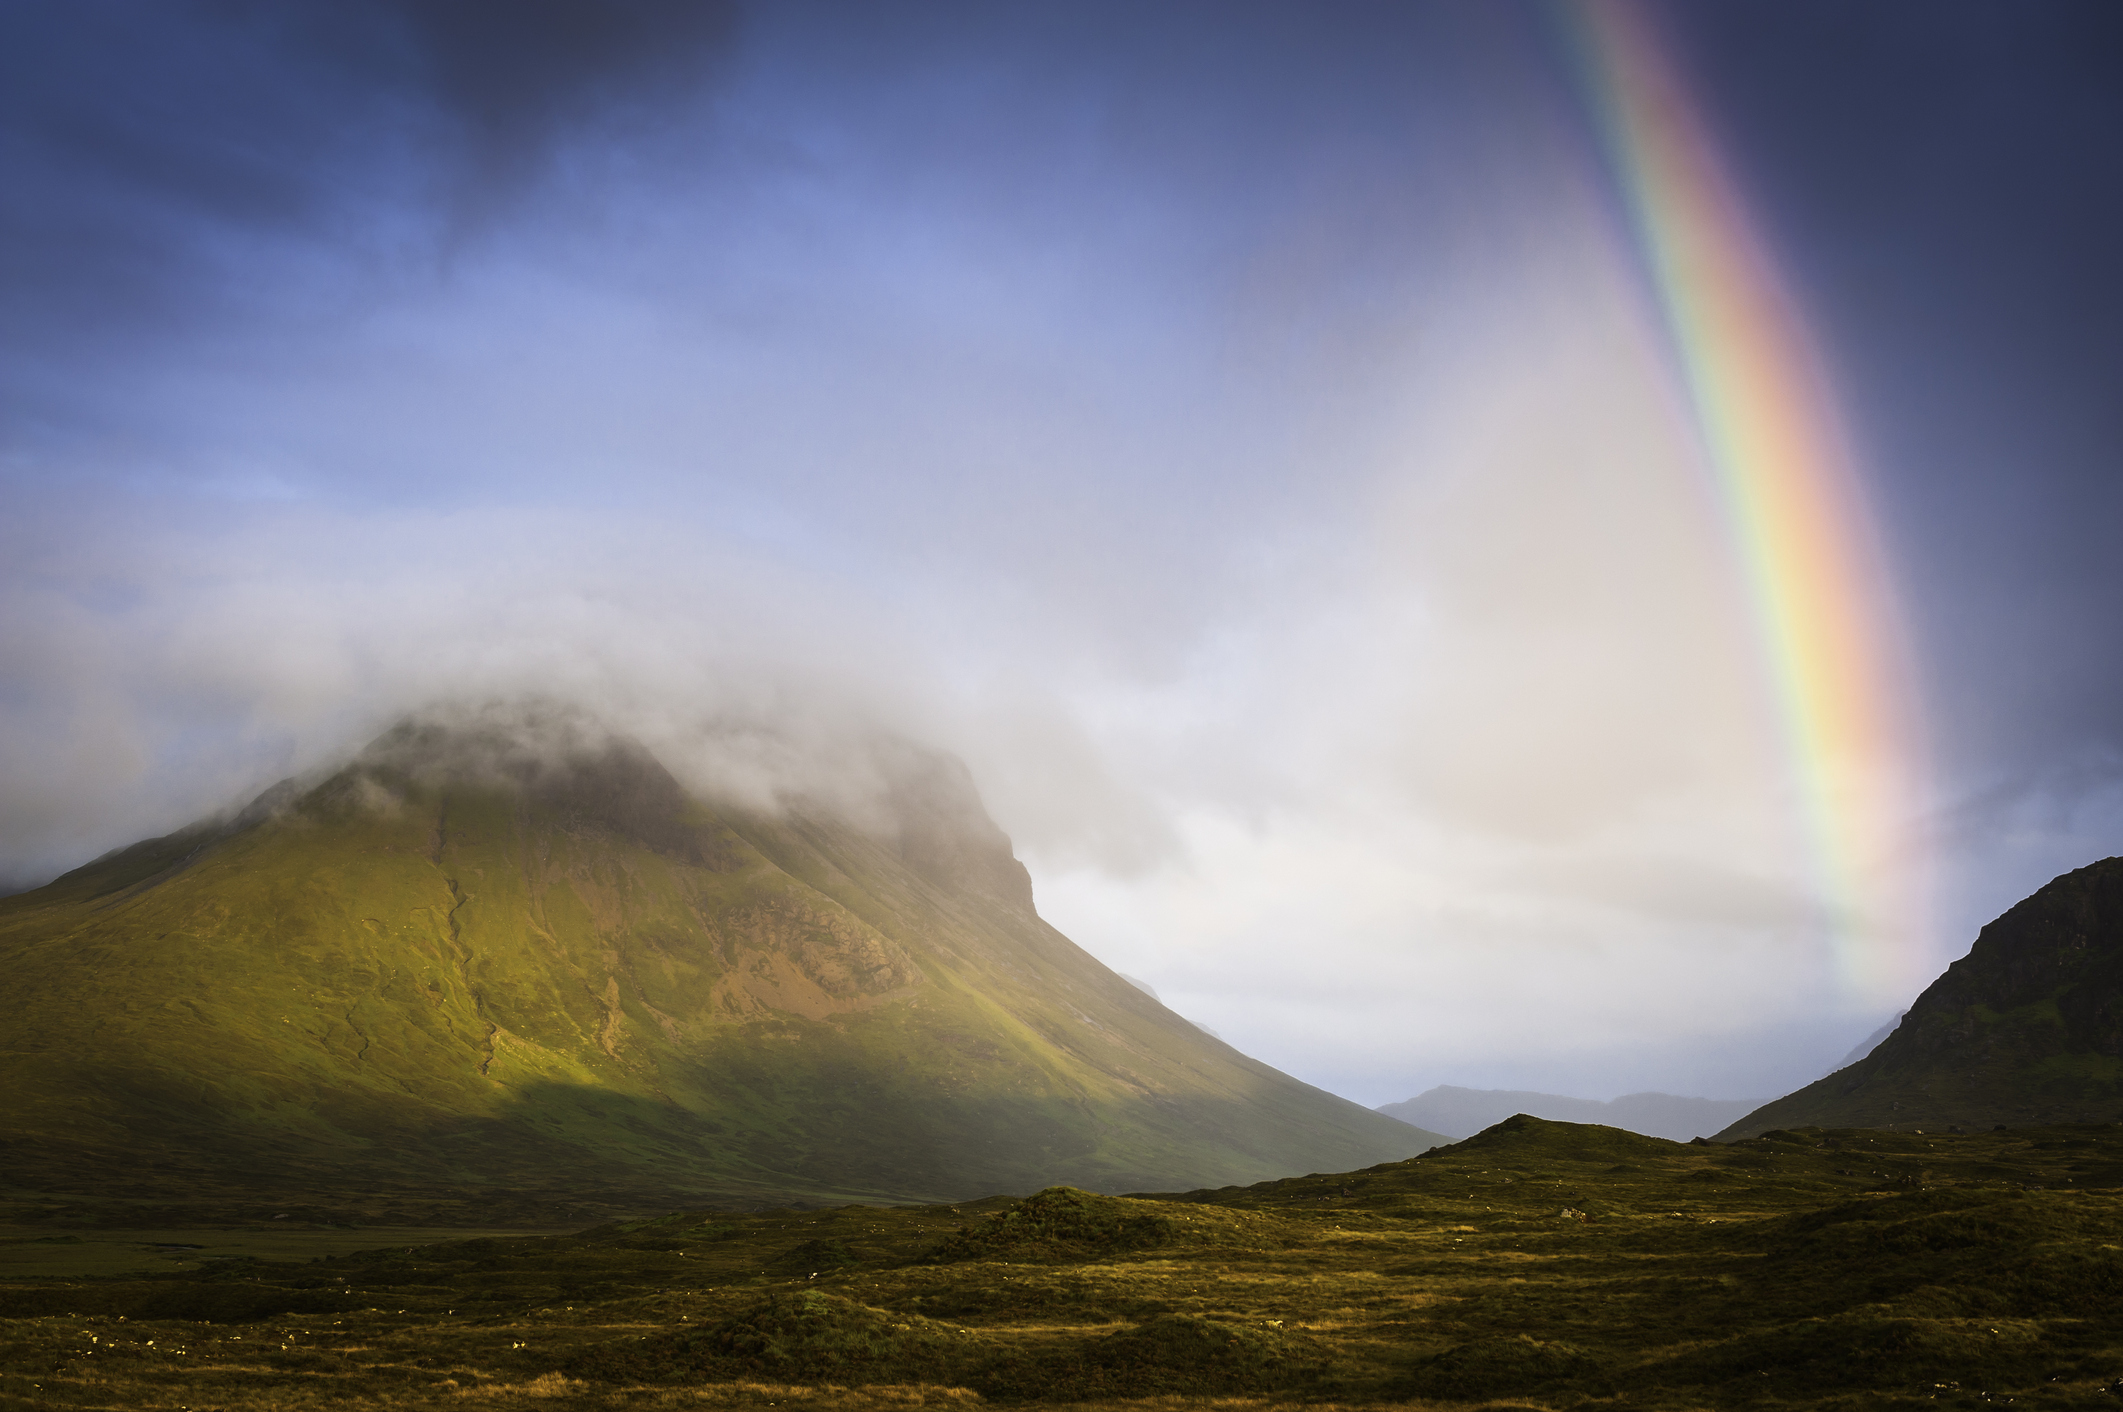 wiirocku: Genesis 9:16 (NKJV) - The rainbow shall